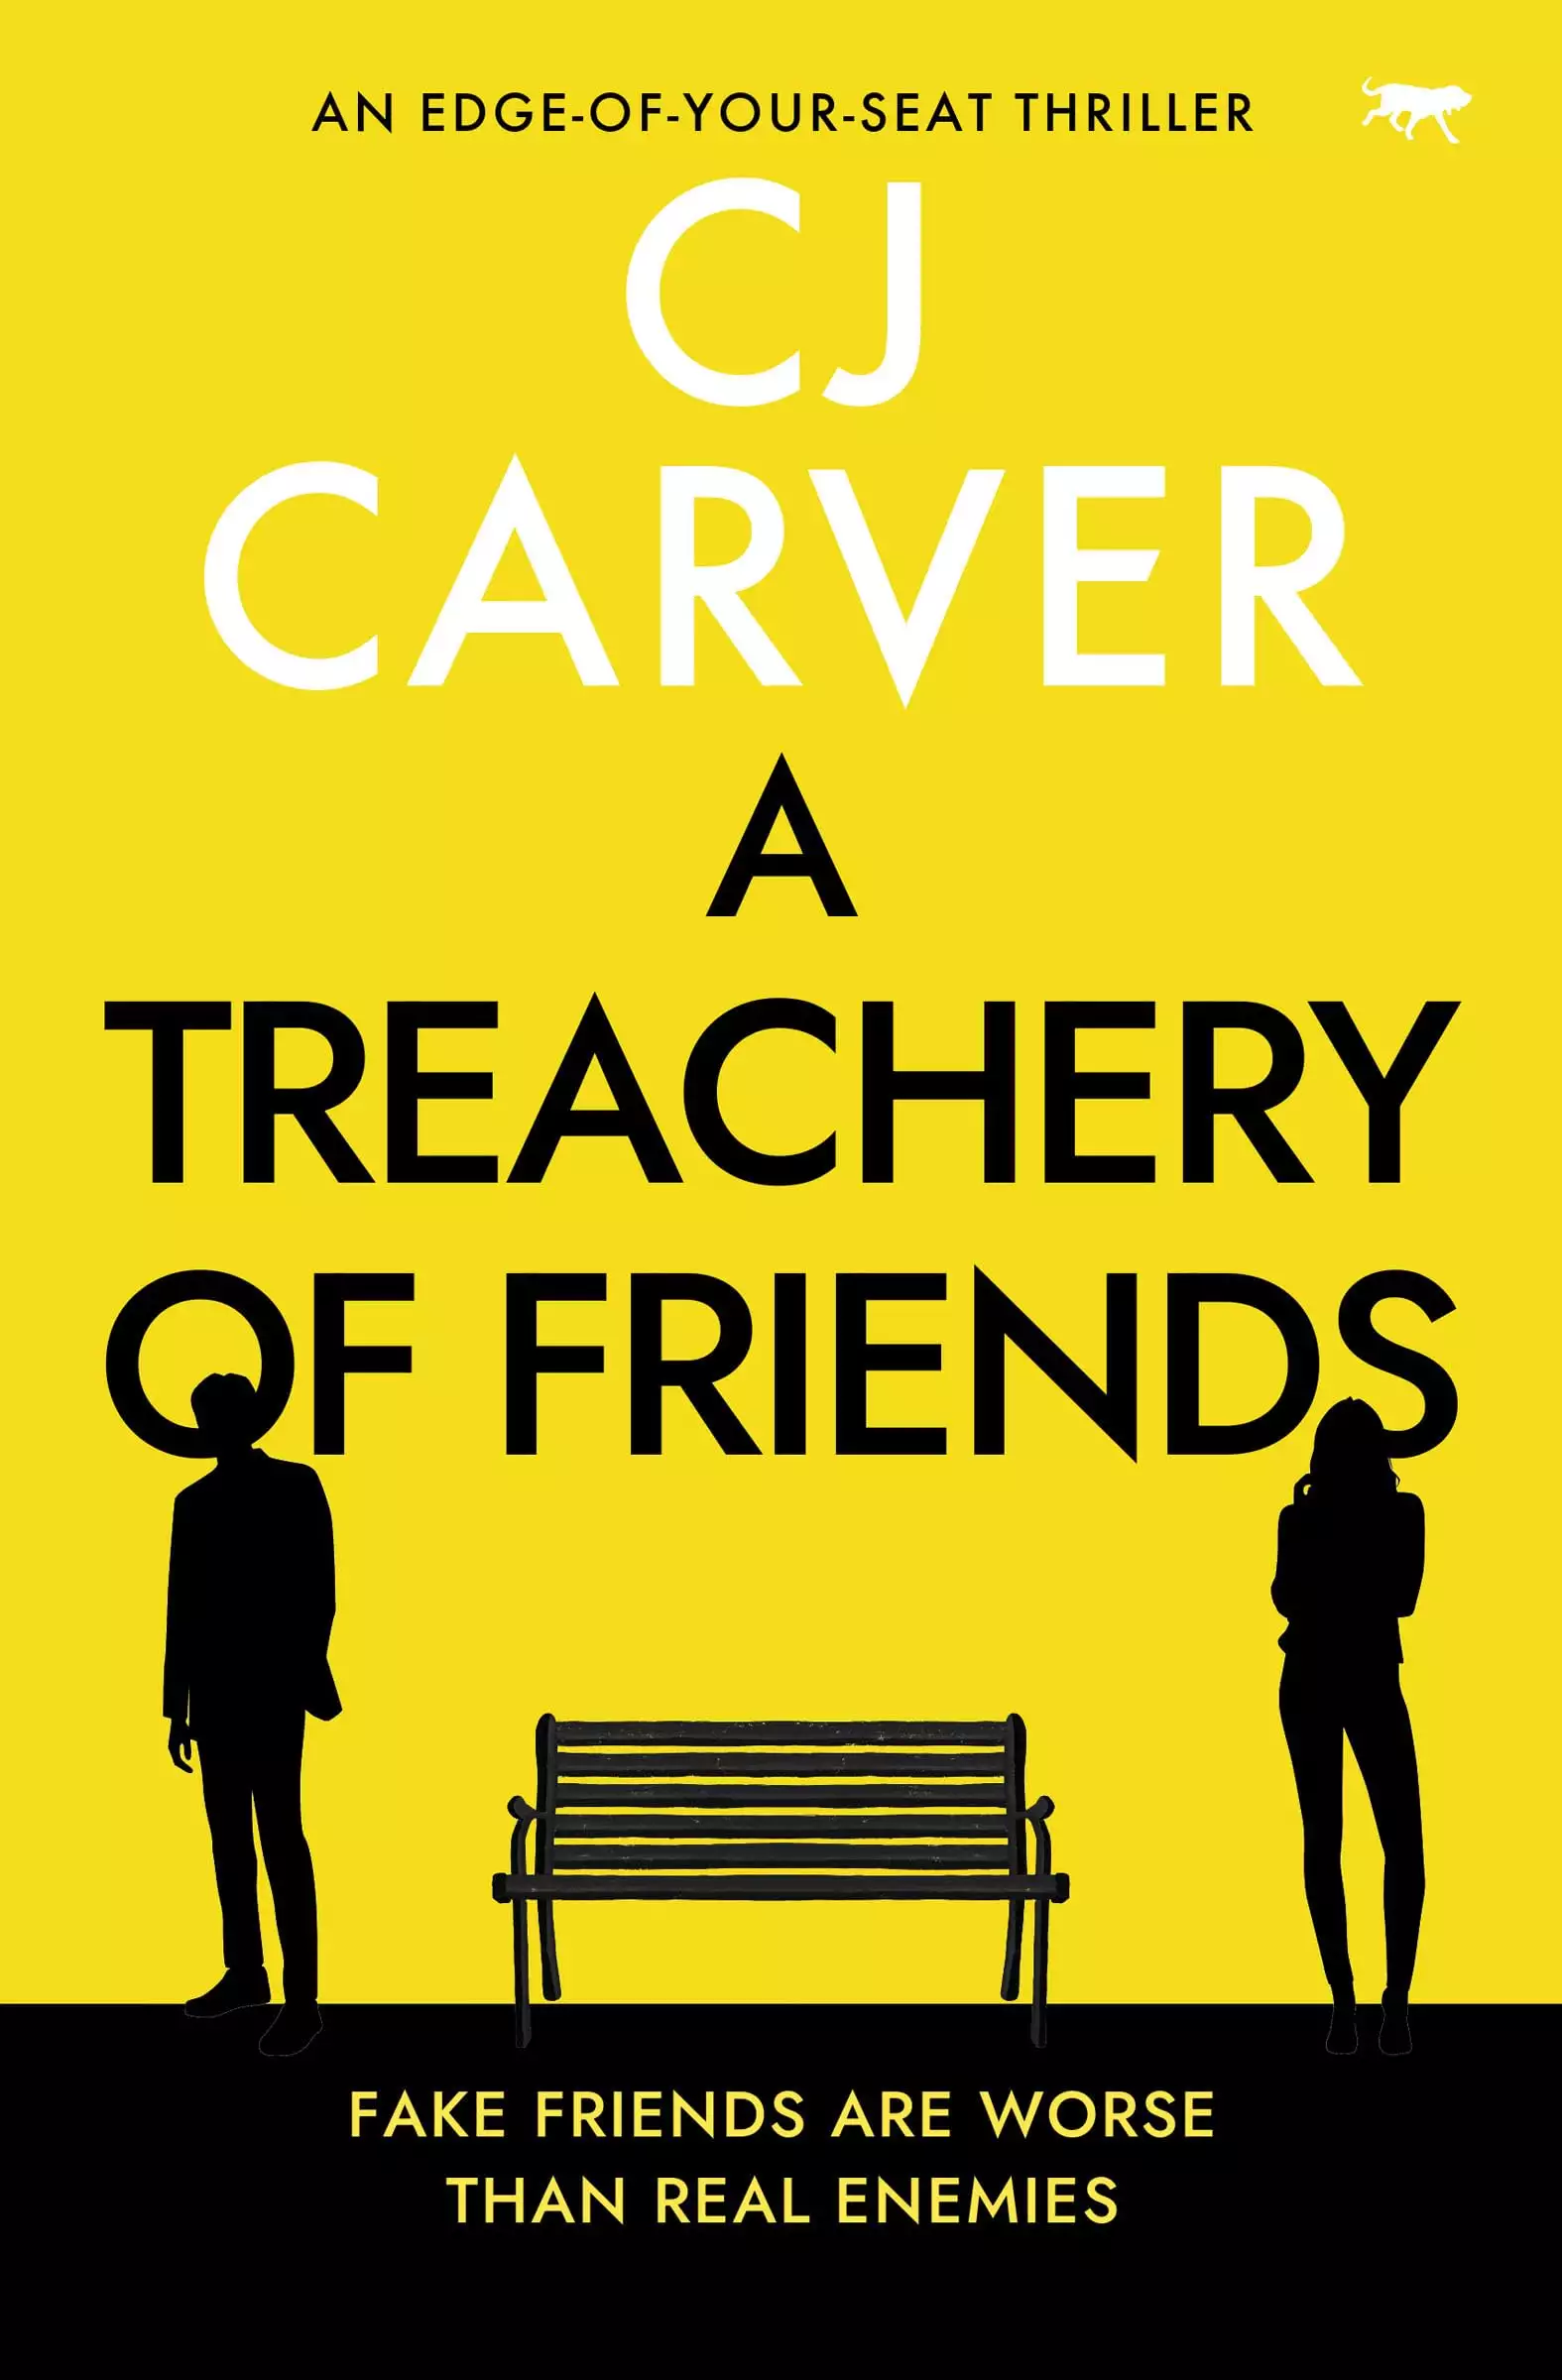 A Treachery of Friends: An edge-of-your-seat thriller